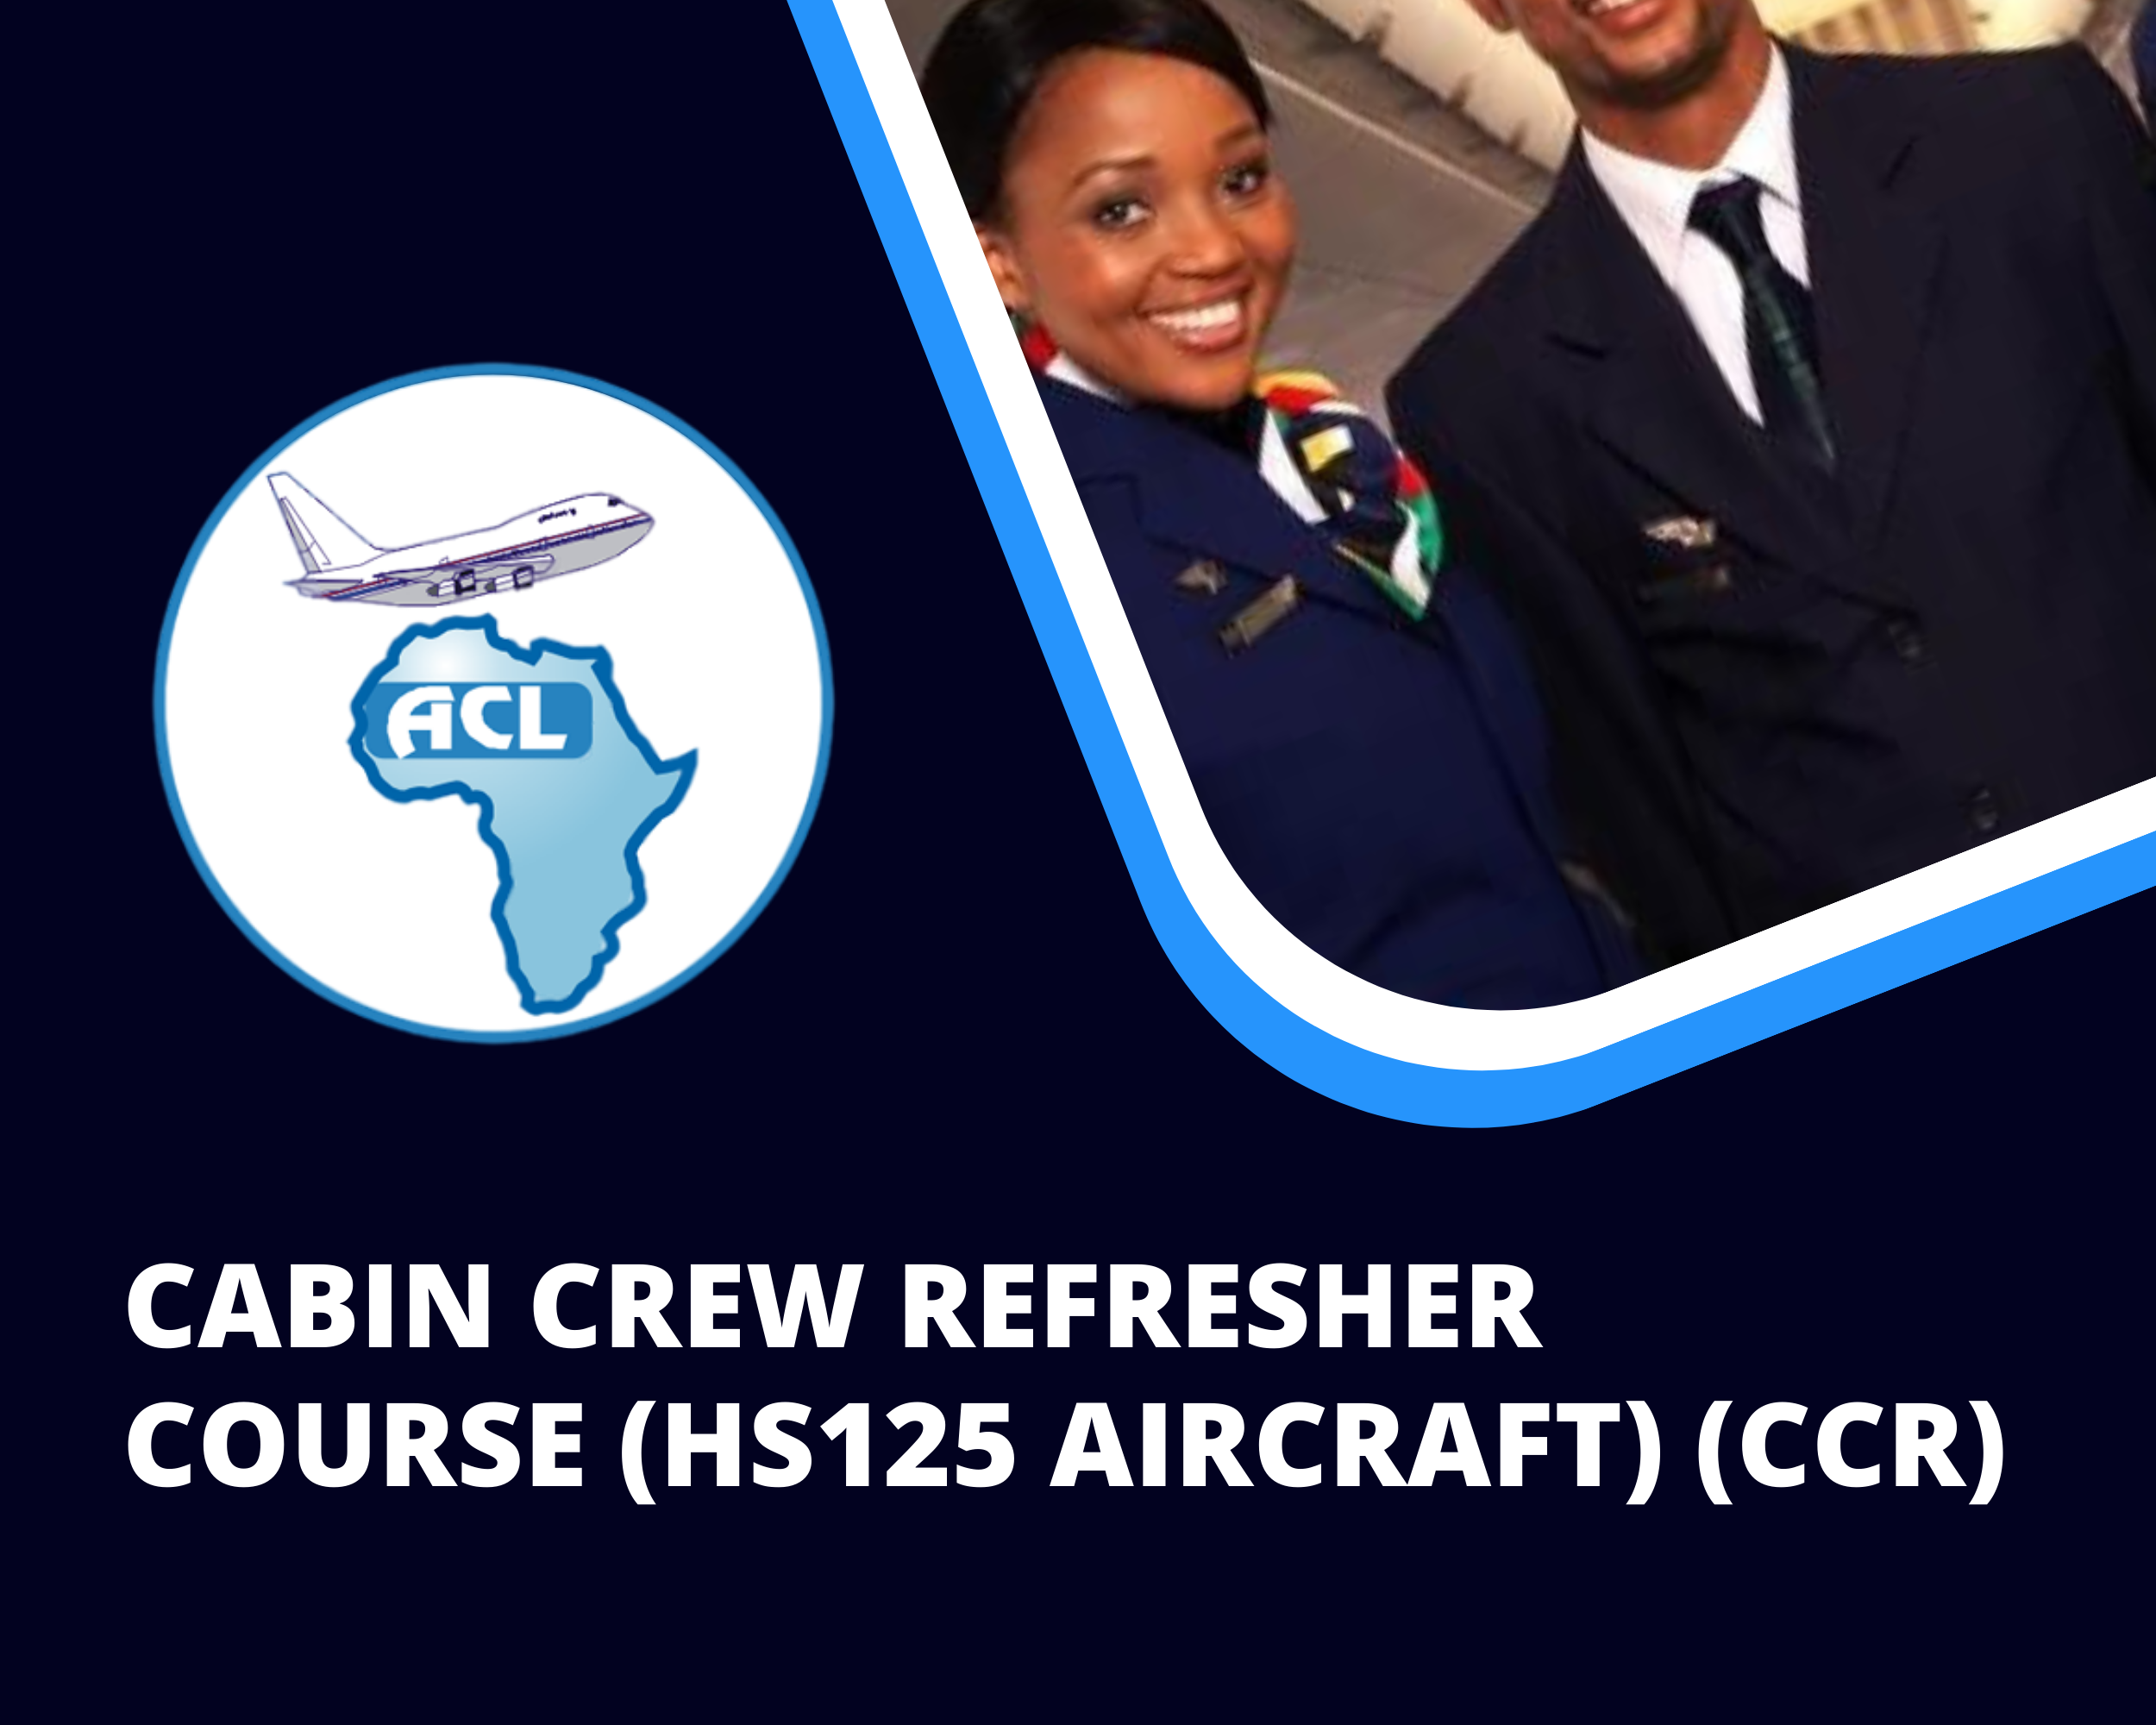 CABIN CREW REFRESHER COURSE (HS125 AIRCRAFT) (CCR)